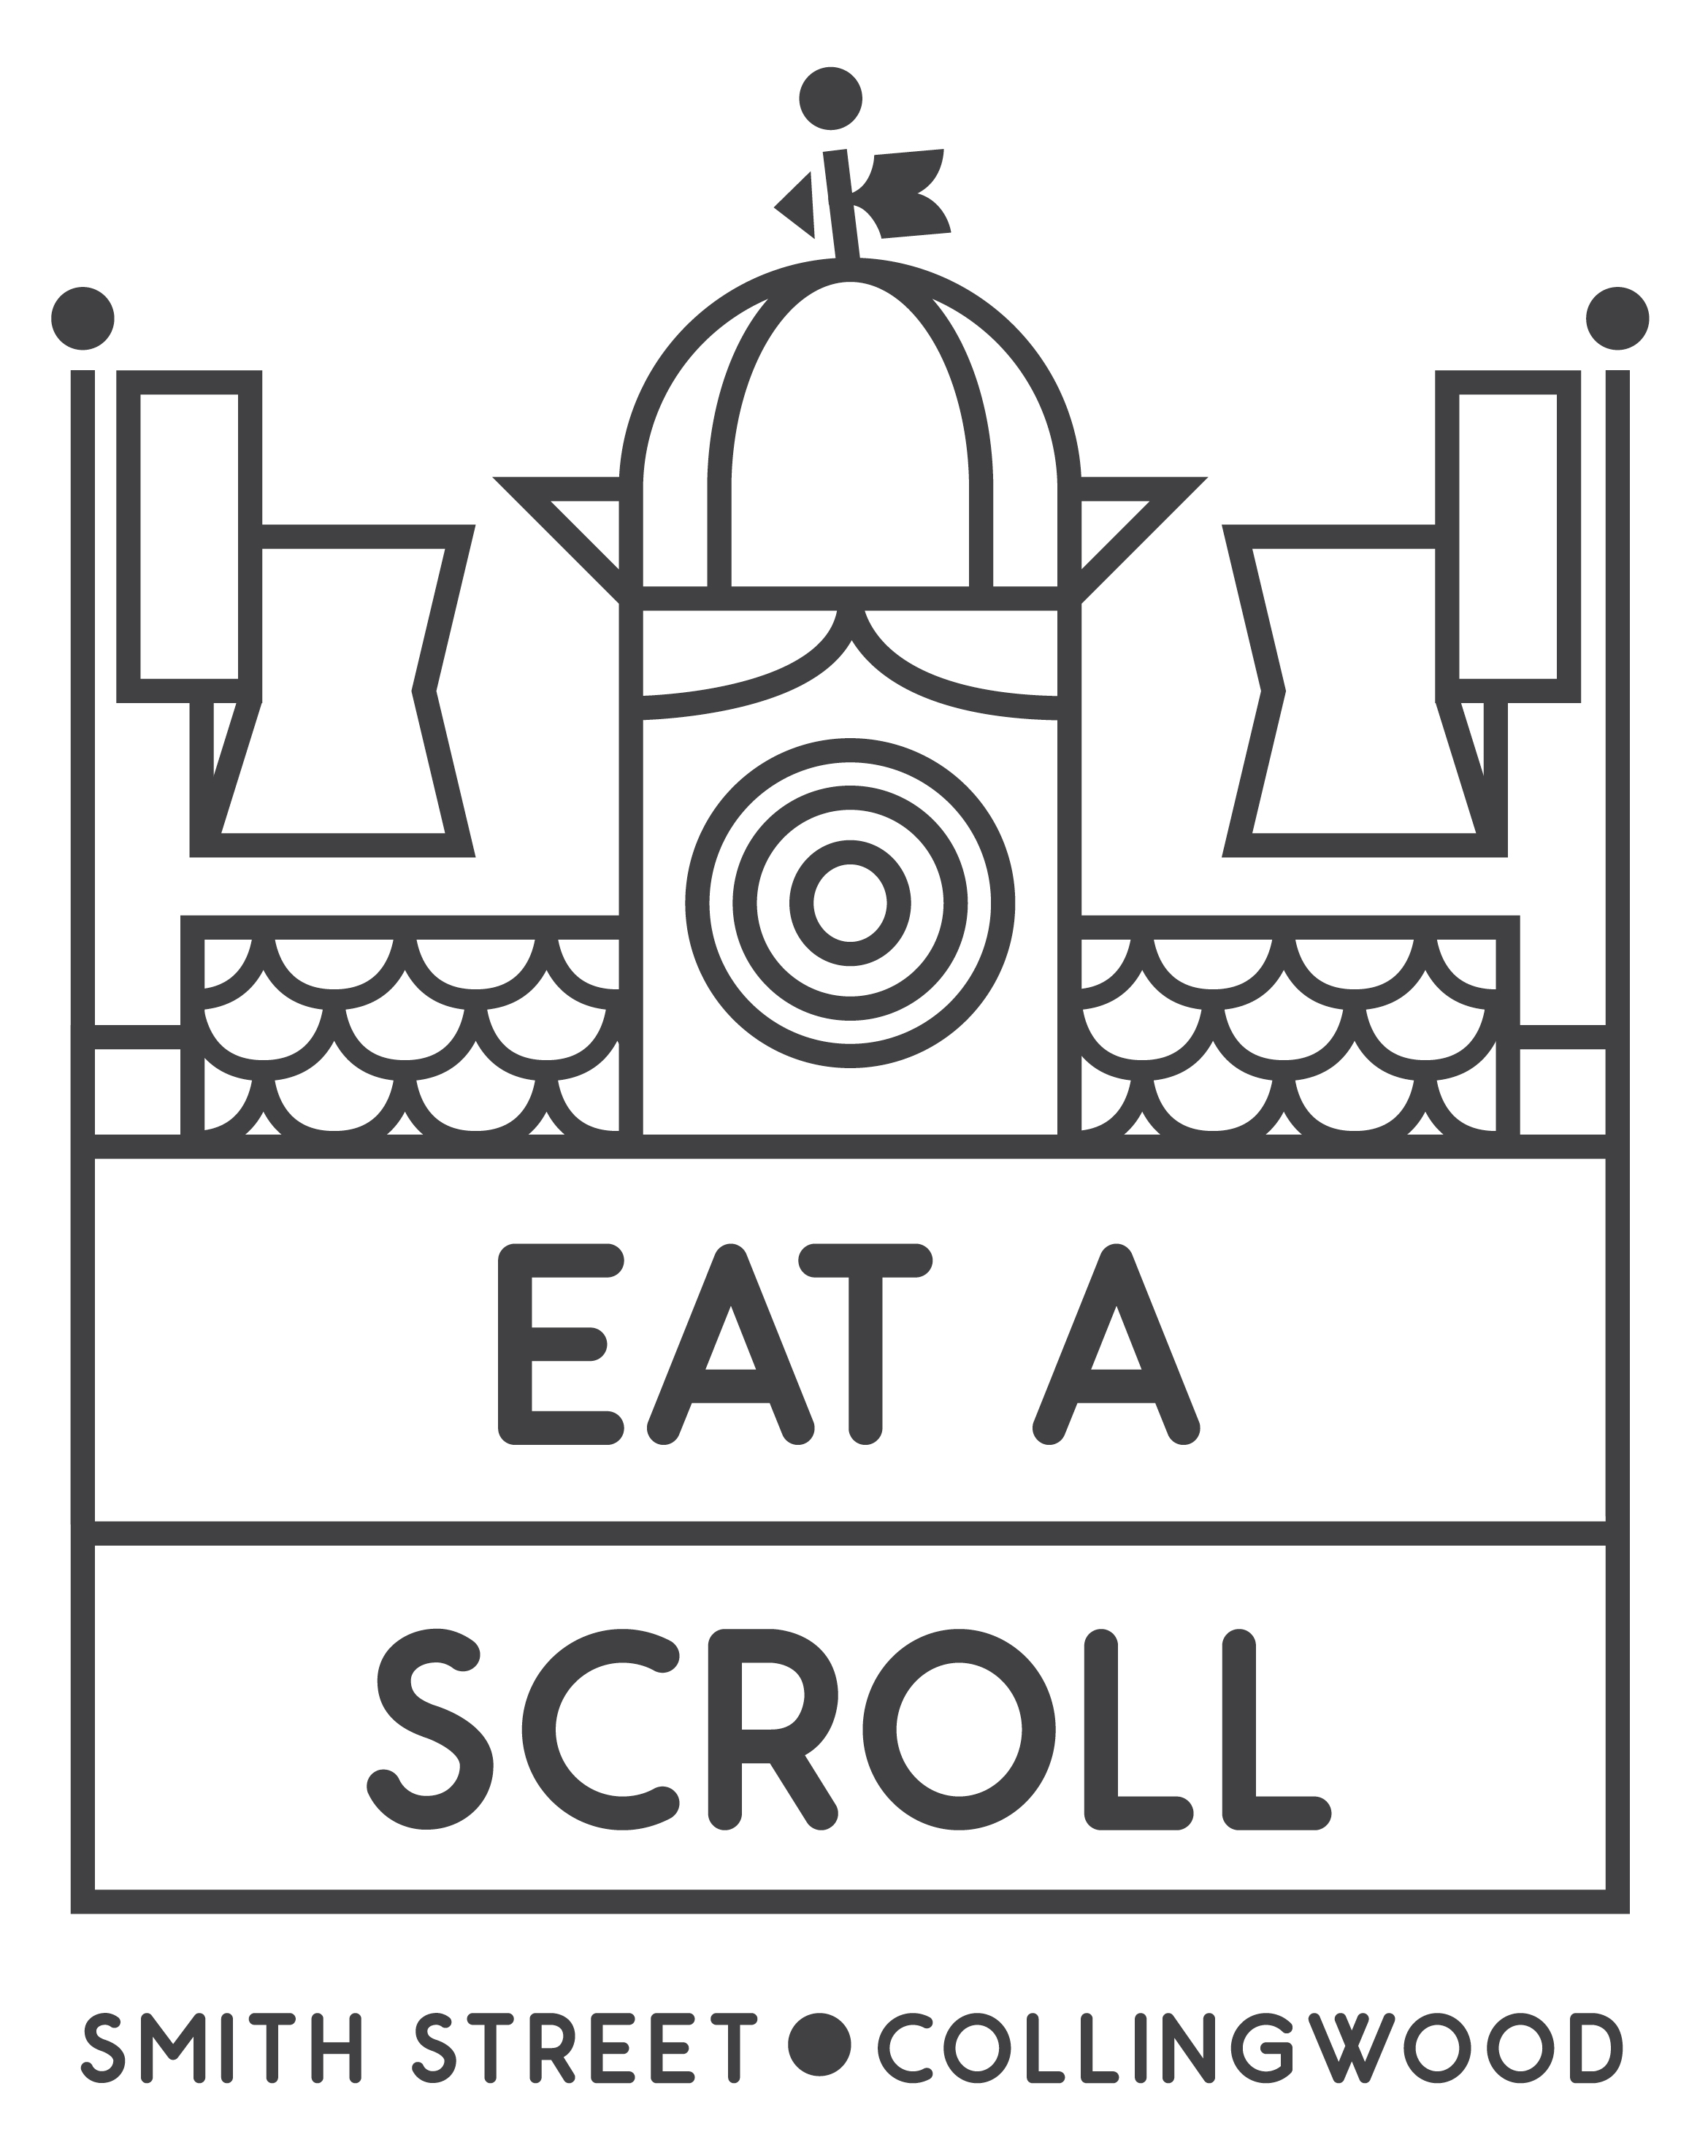 Eat a scroll